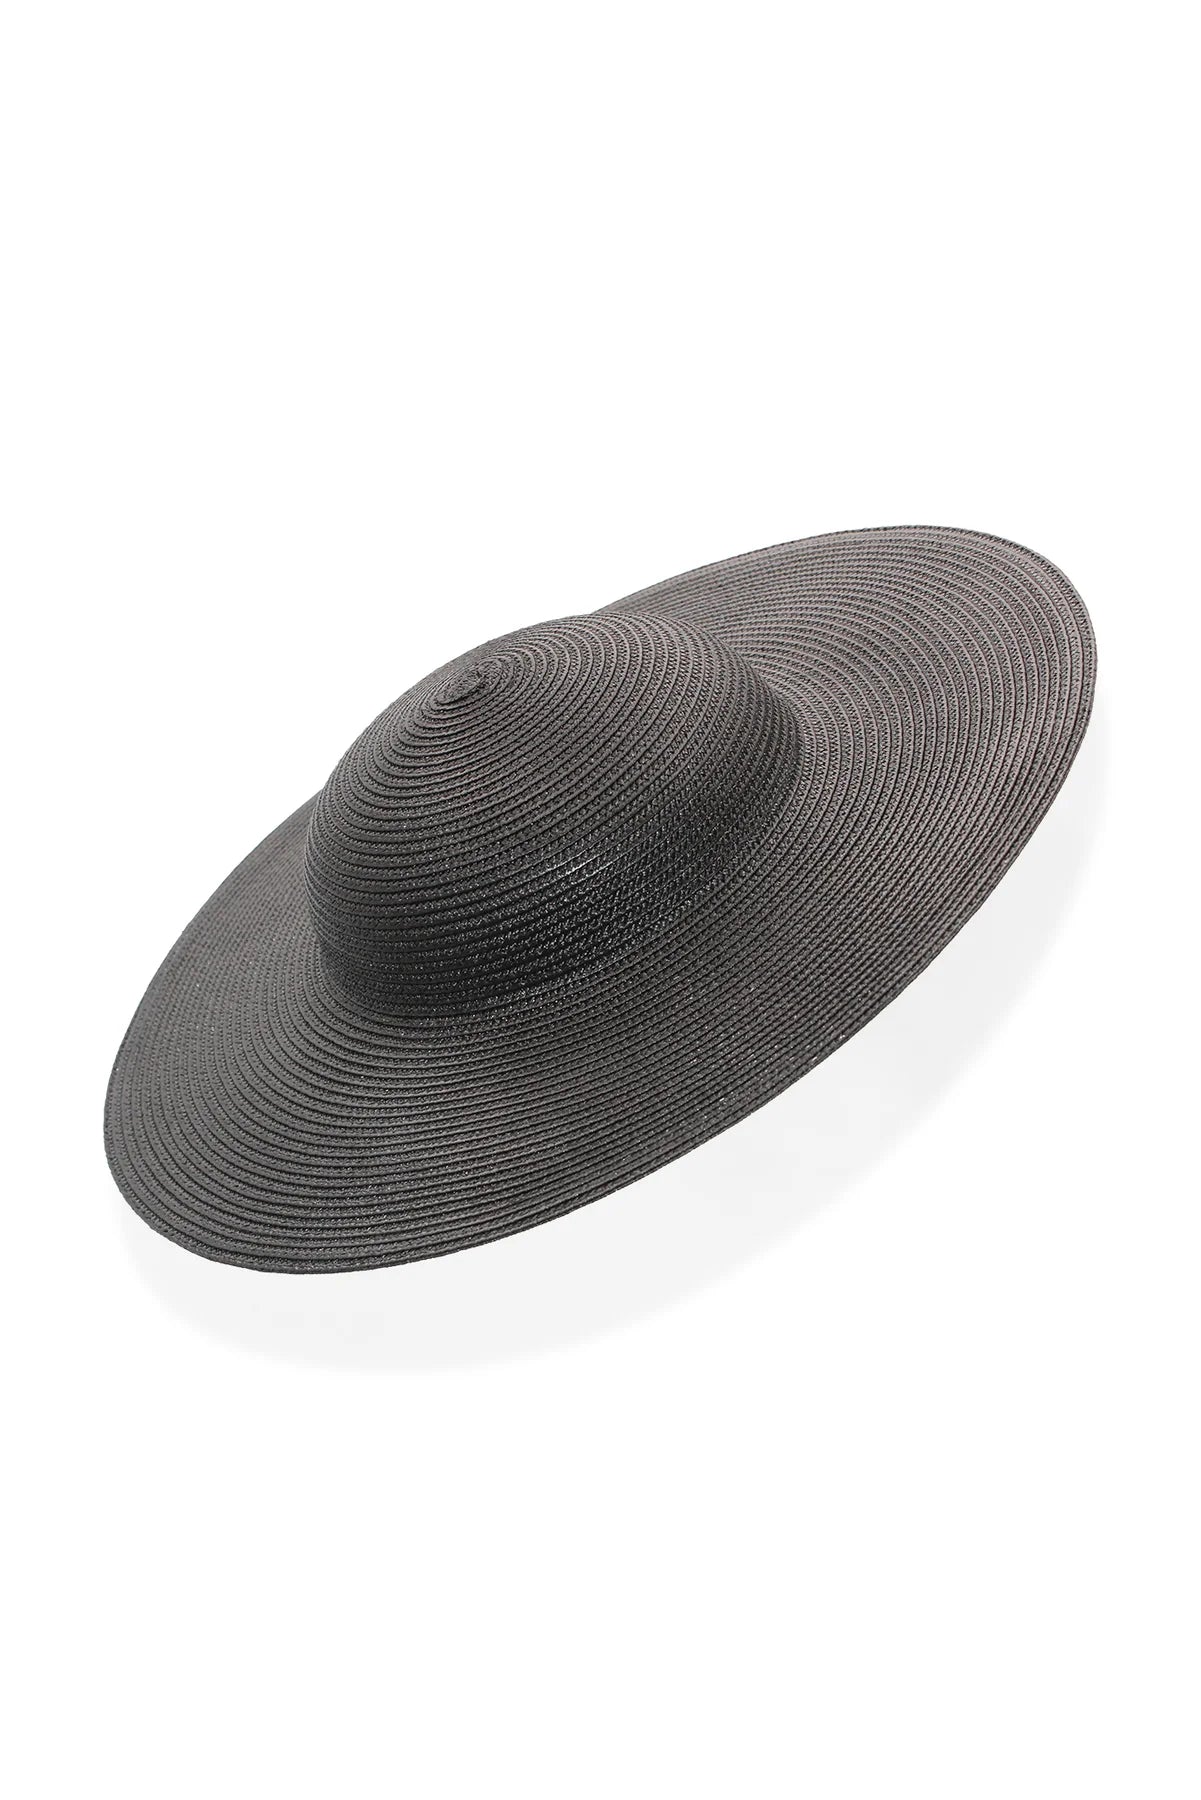 Mona Plate Hat in Black